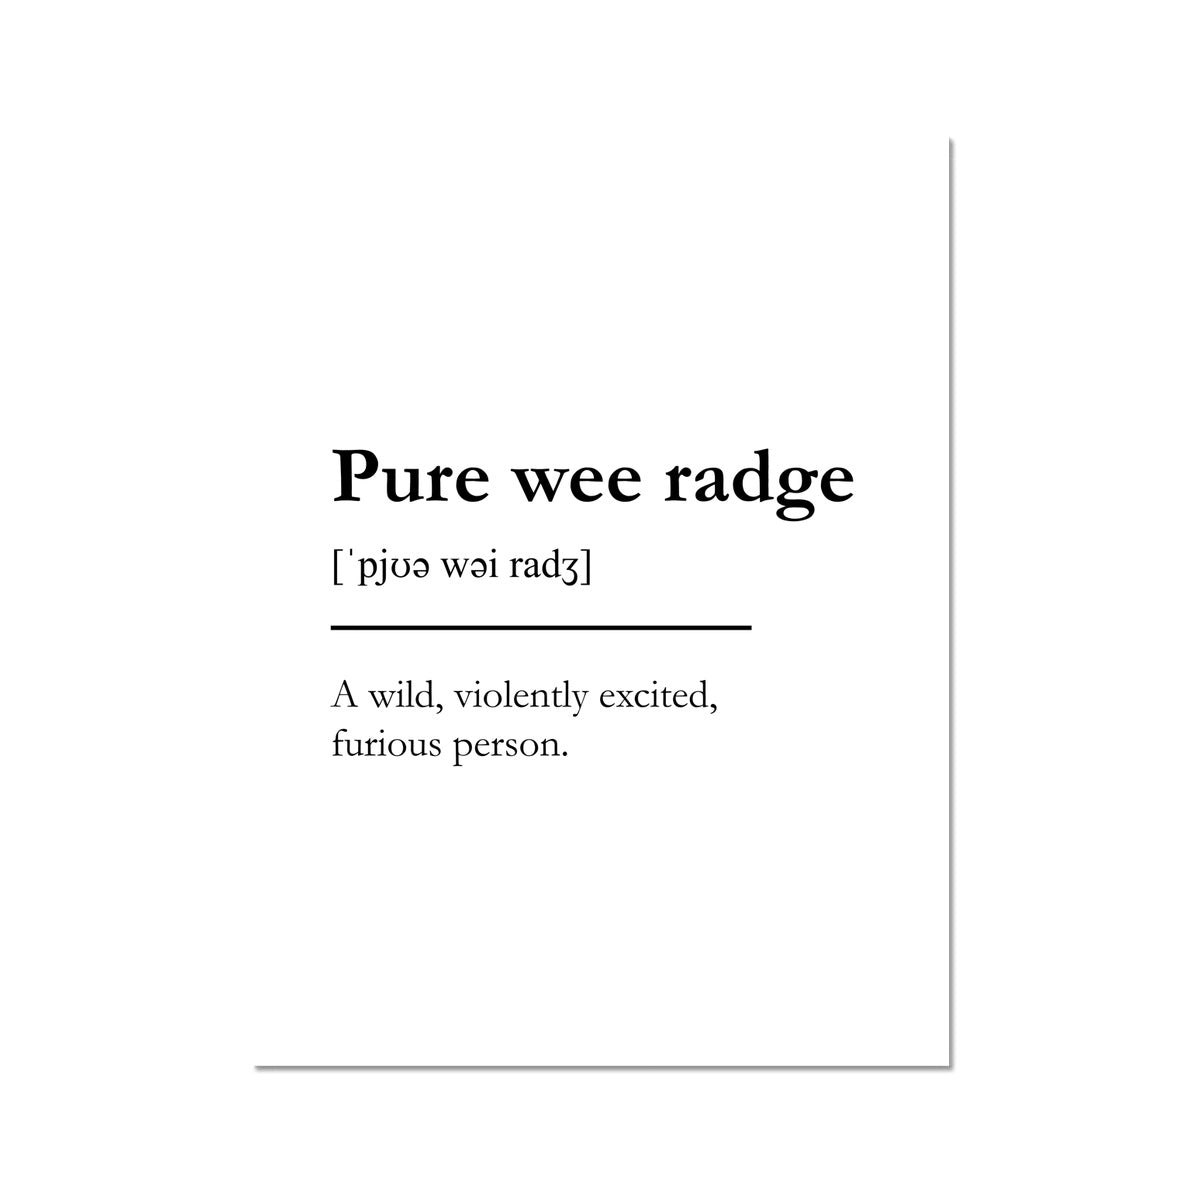 "Pure wee radge" - Scottish Slang